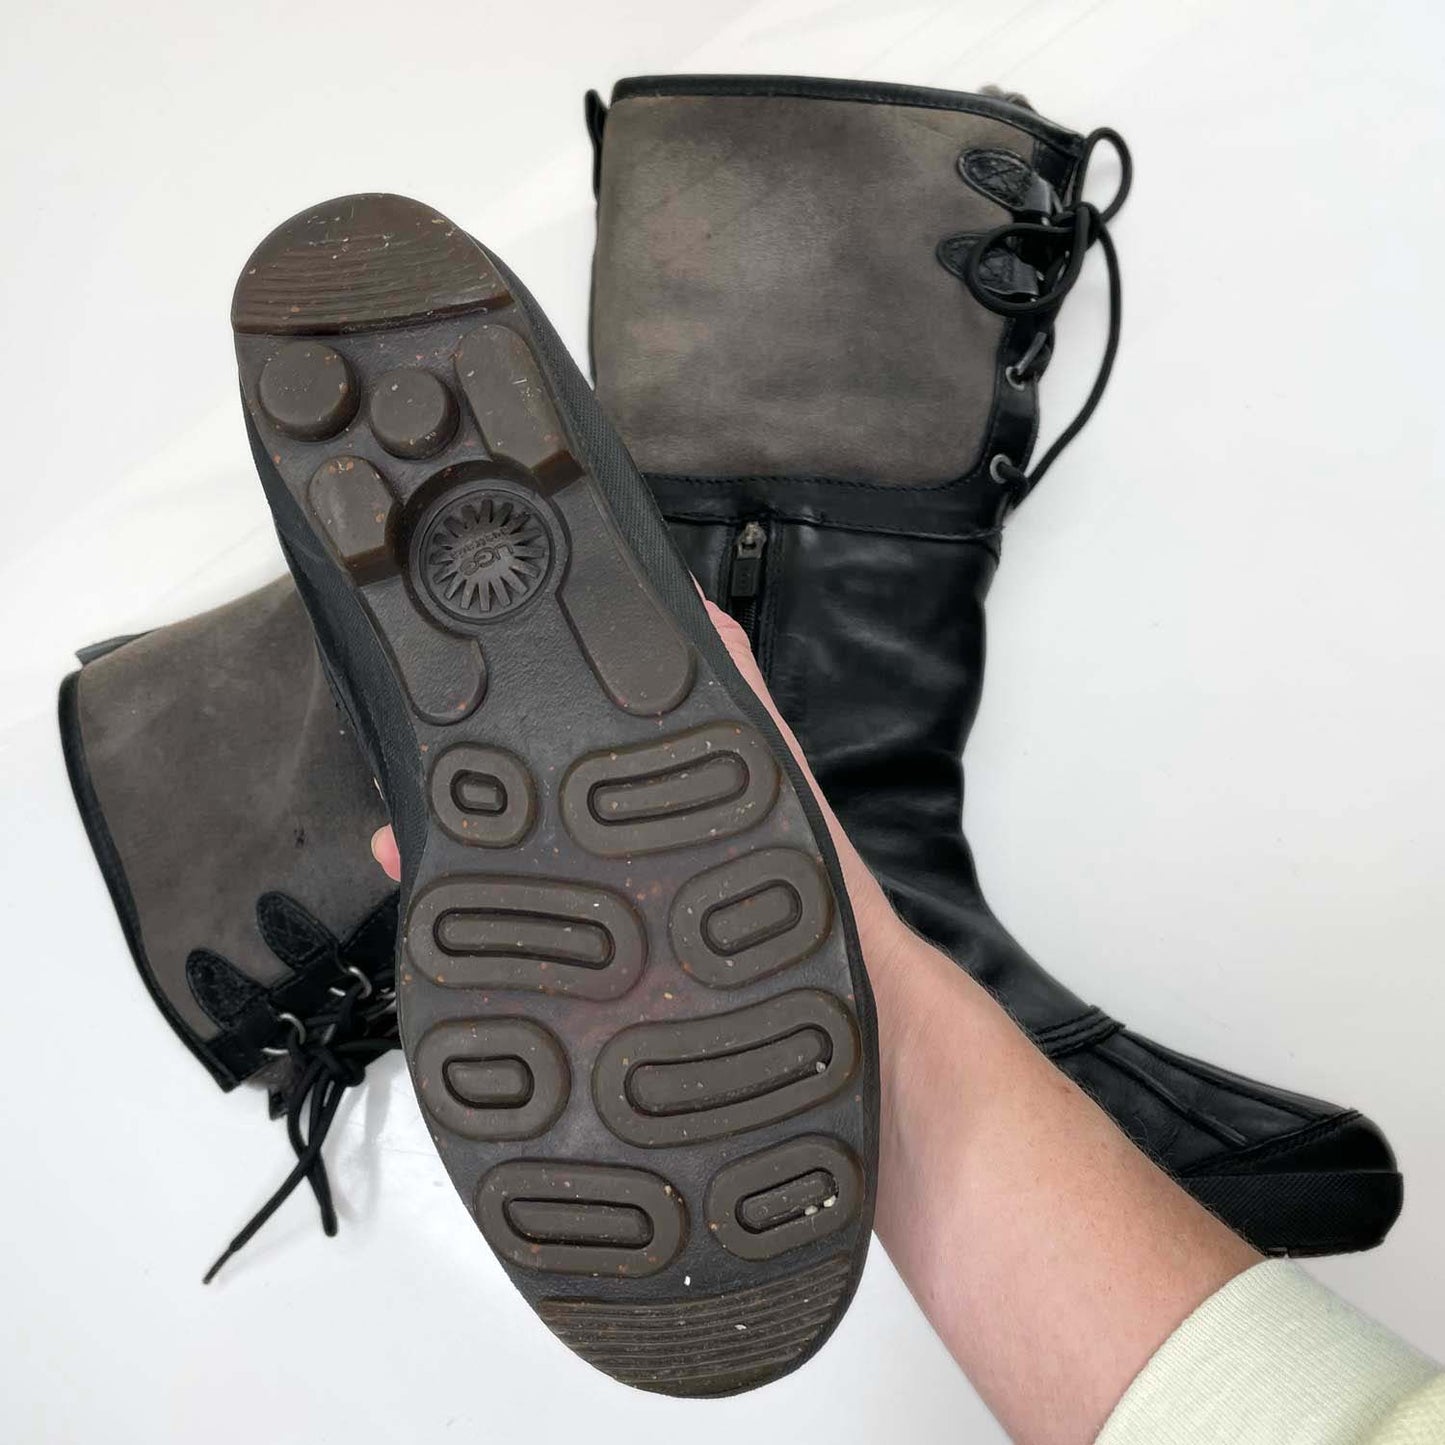 ugg becloud tall black sheepskin waterproof boots - size 10